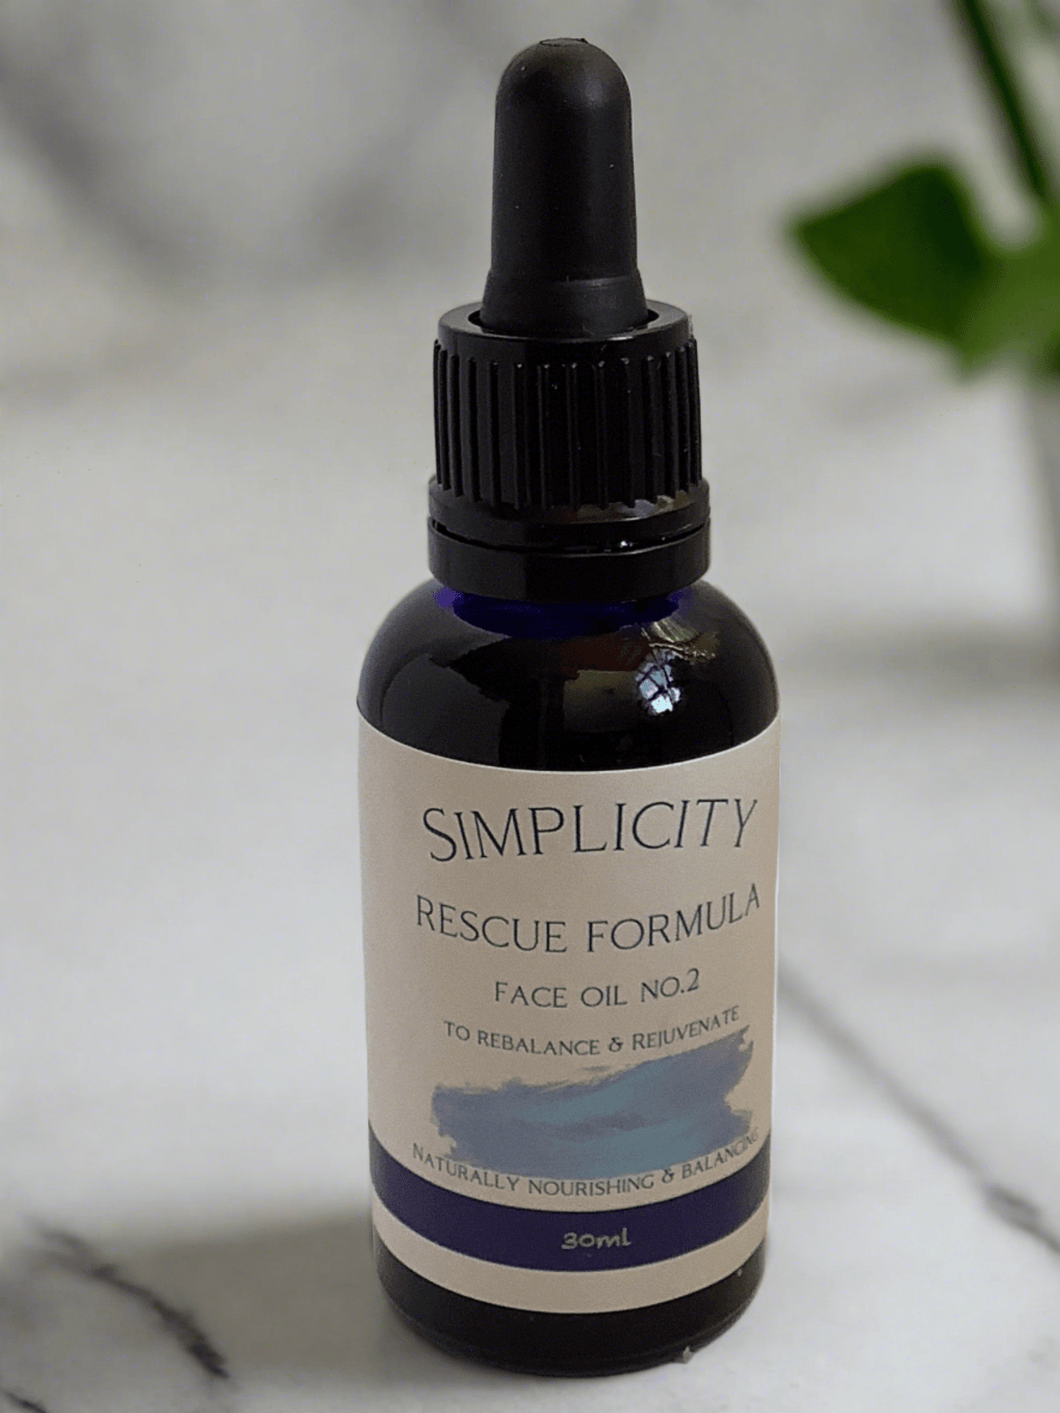 Soap Matters Anti-Aging Skin Care Kits 30ml Simplicity Face Oil No2 - to Rebalance & Rejuvenate (Award winning)